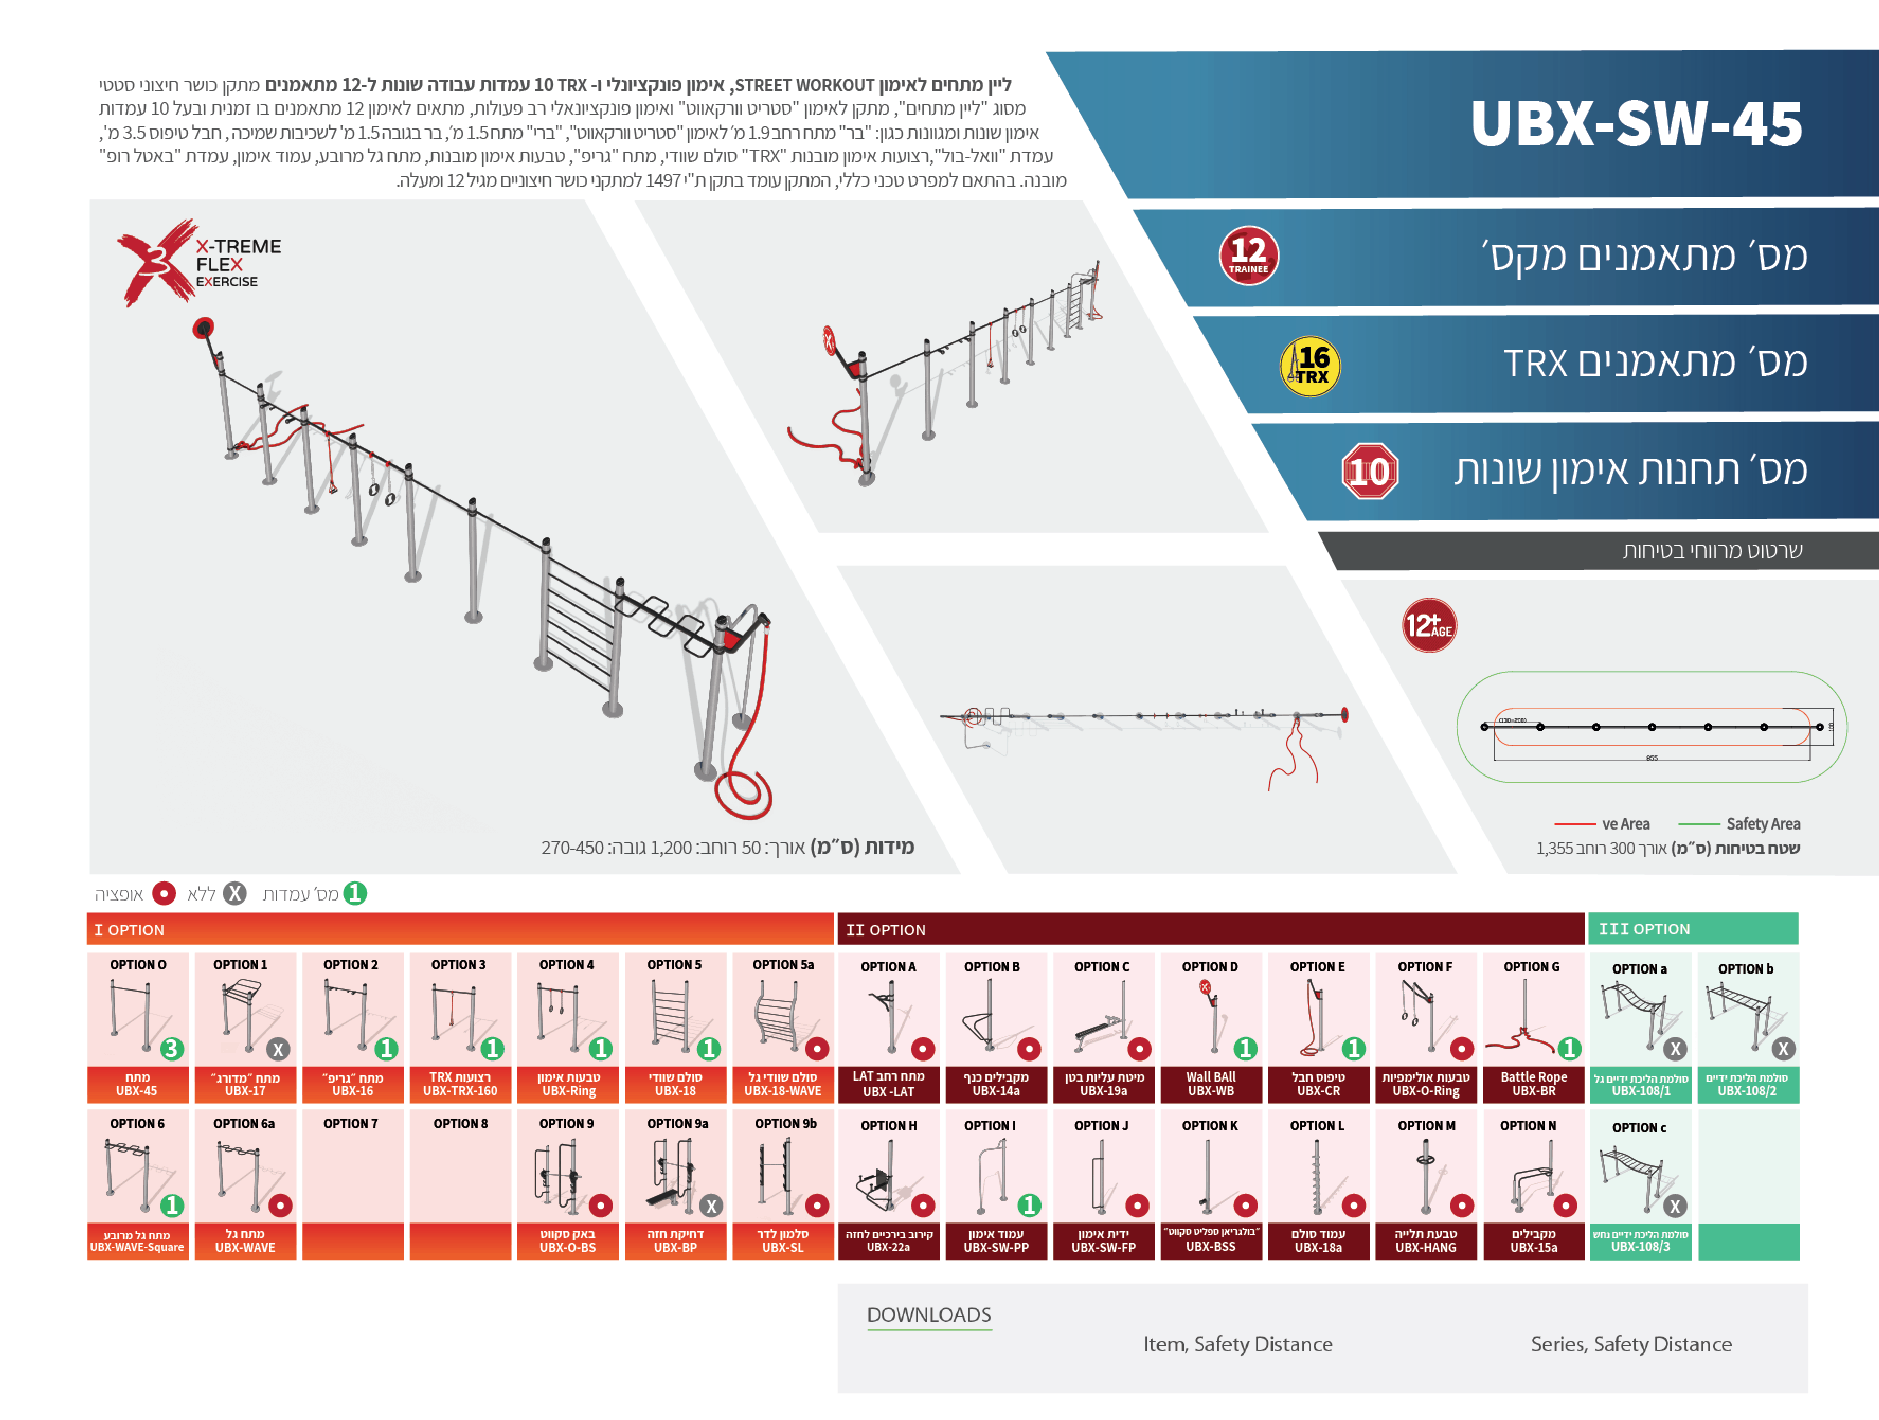 ubx-sw-45 אורבניקס - מתקן כושר